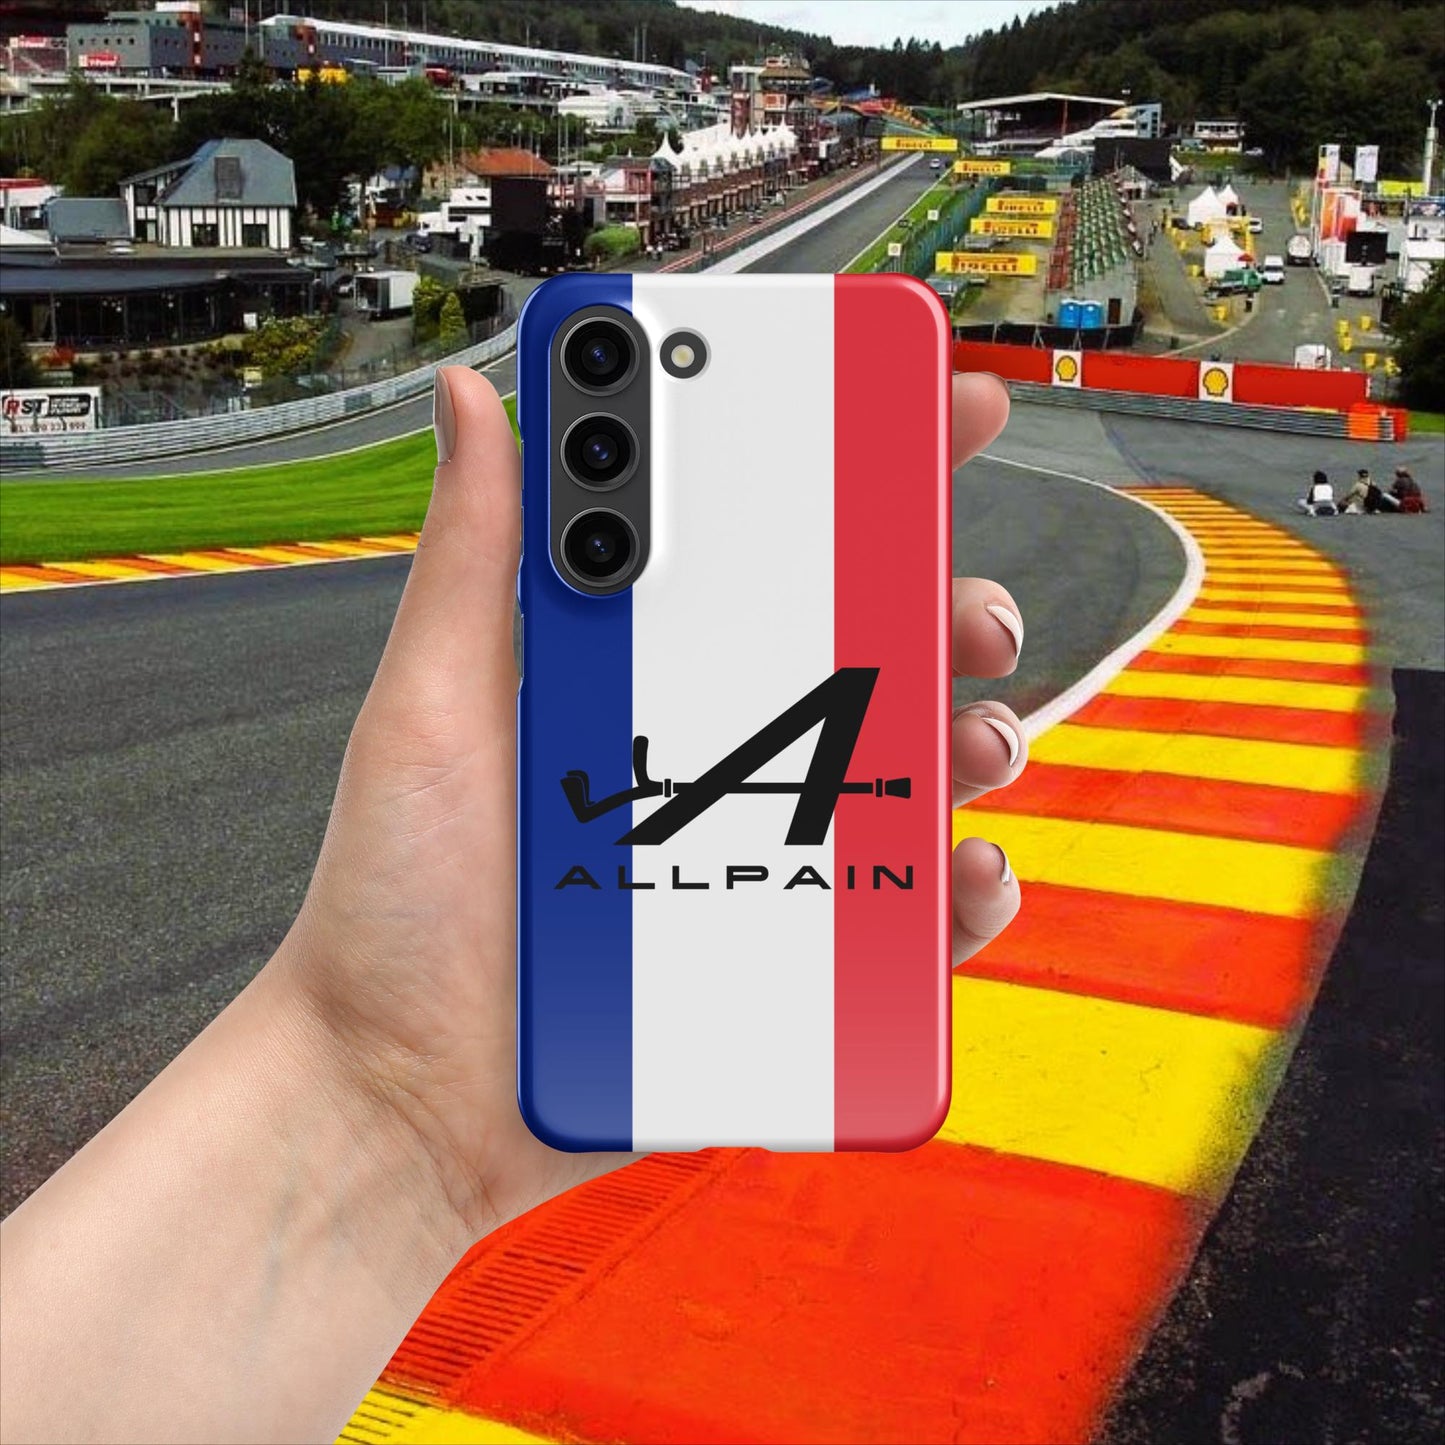 Allpain Alpine F1 Formula 1 Pierre Gasly Esteban Ocon Alpine Snap case for Samsung Next Cult Brand Alpine, F1